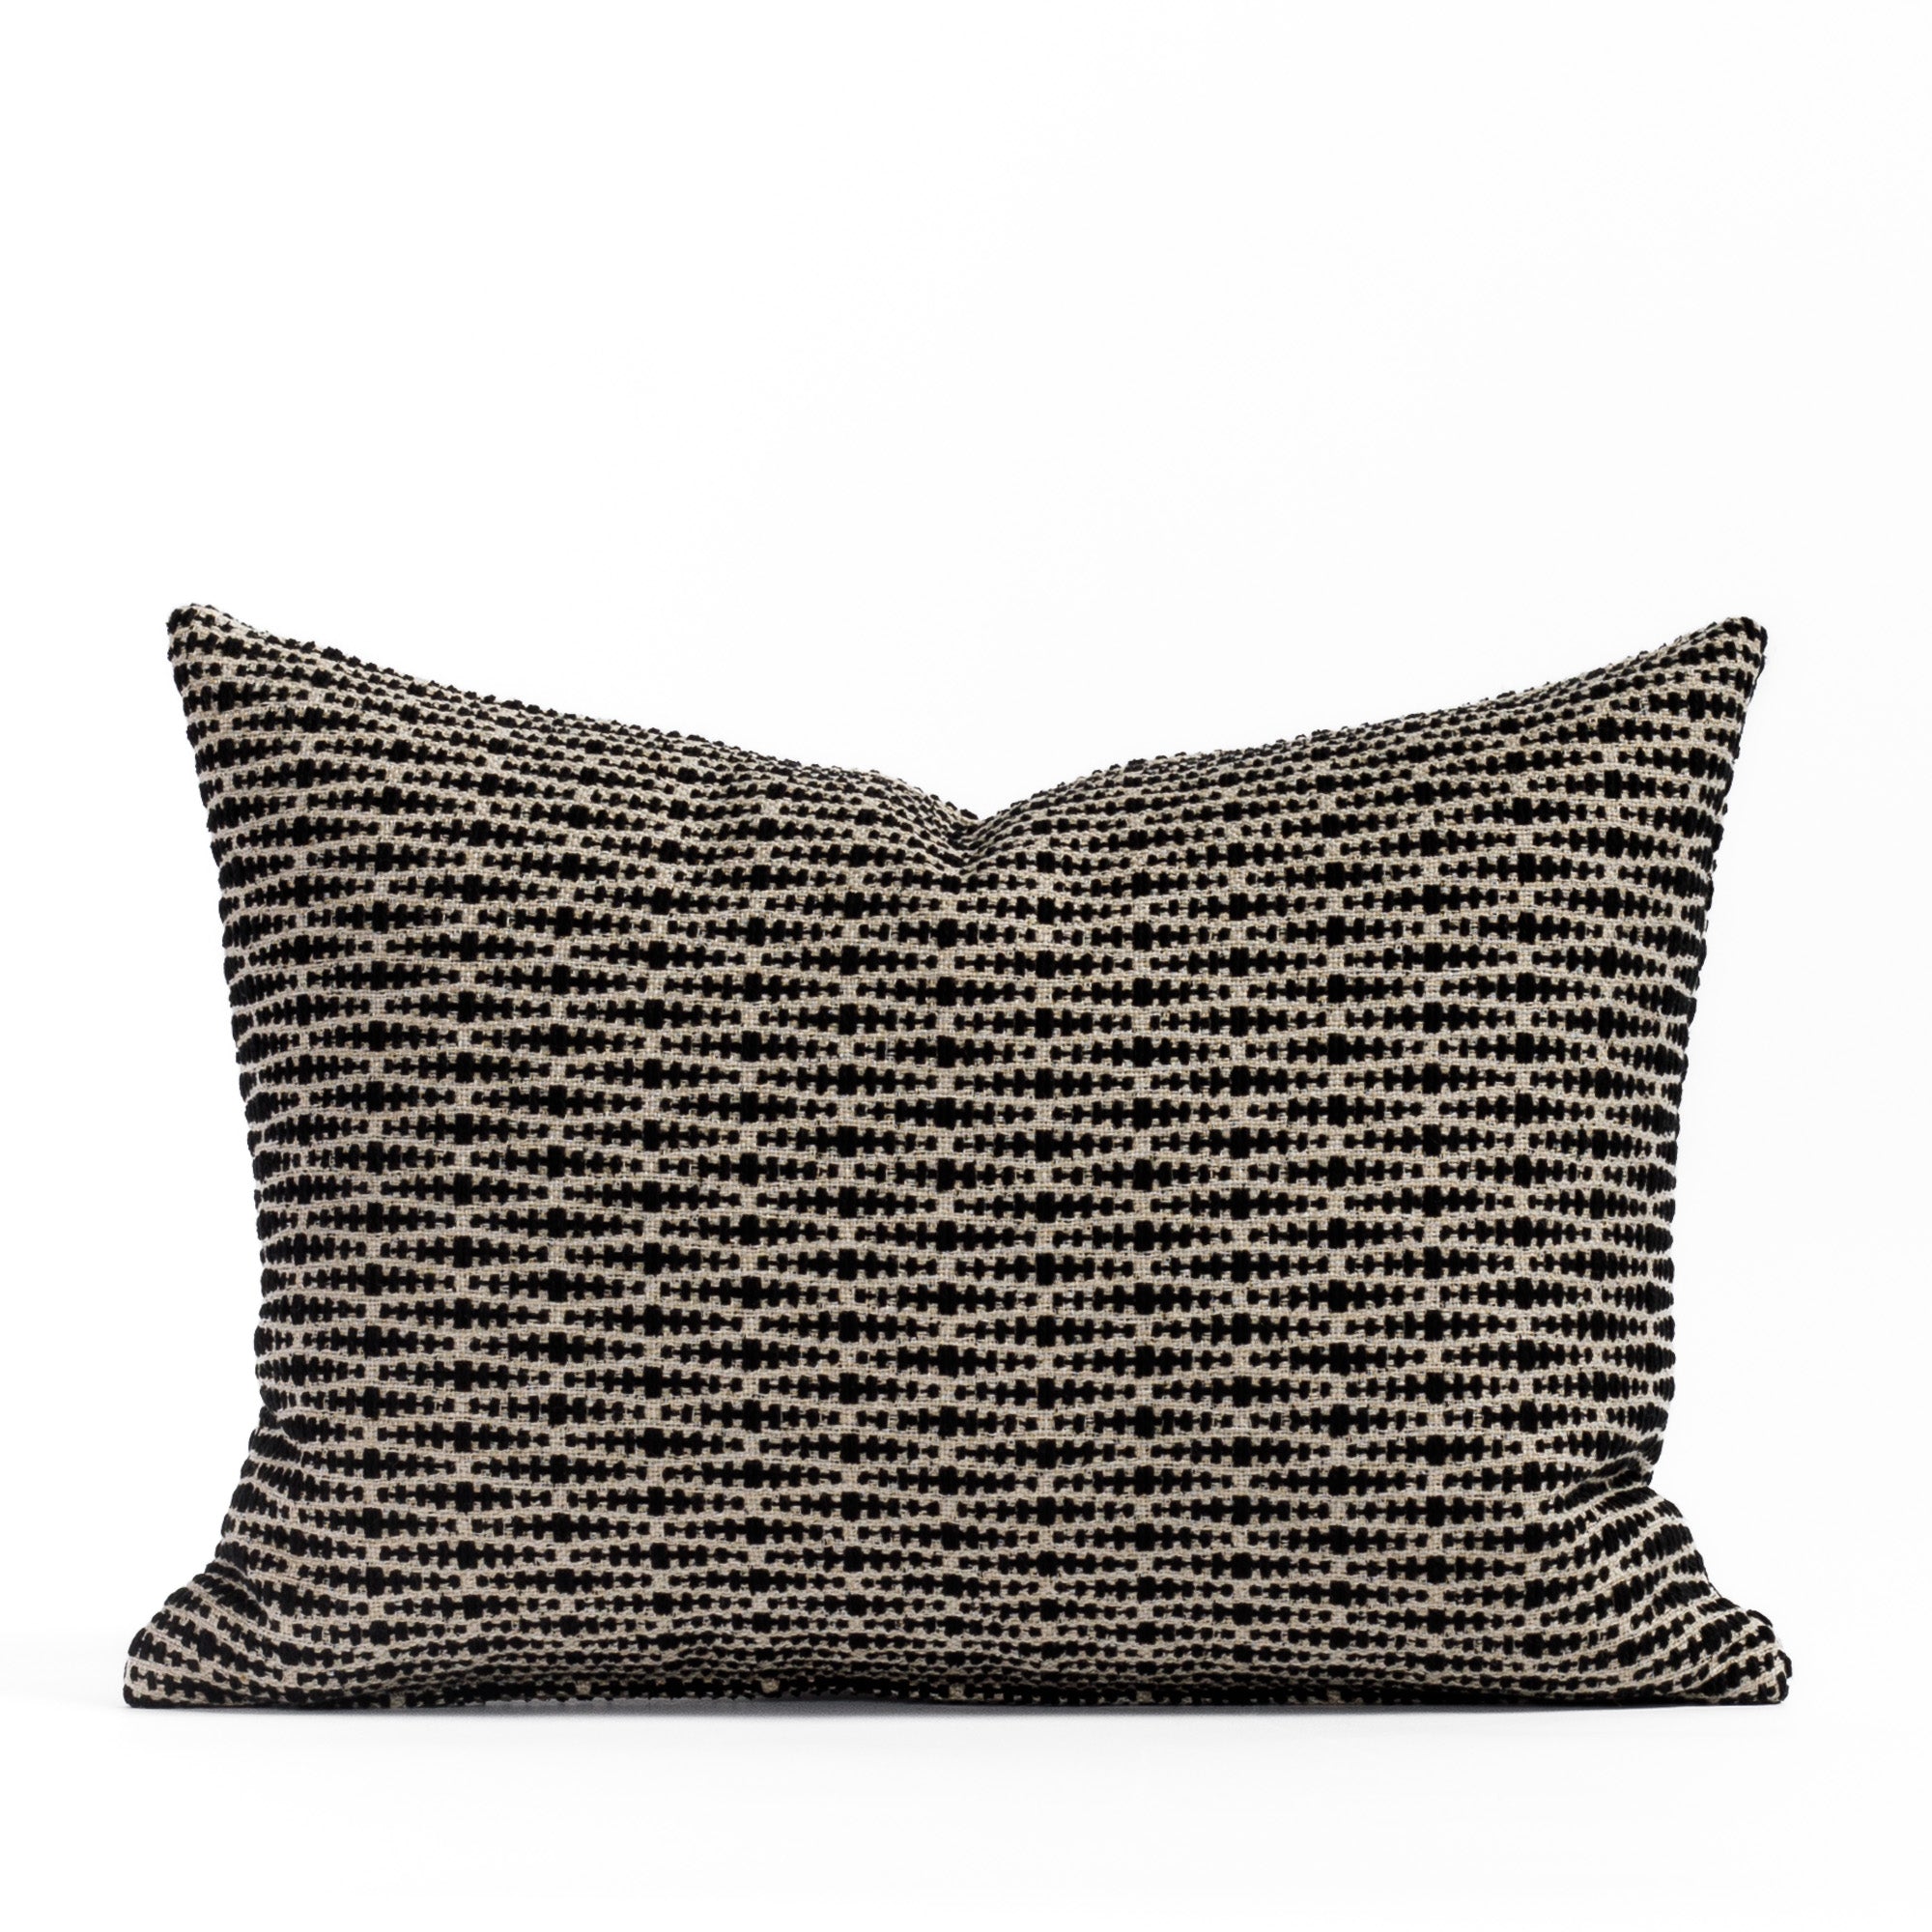 Dario 14x20, a black and tan geometric patterned lumbar pillow from Tonic Living